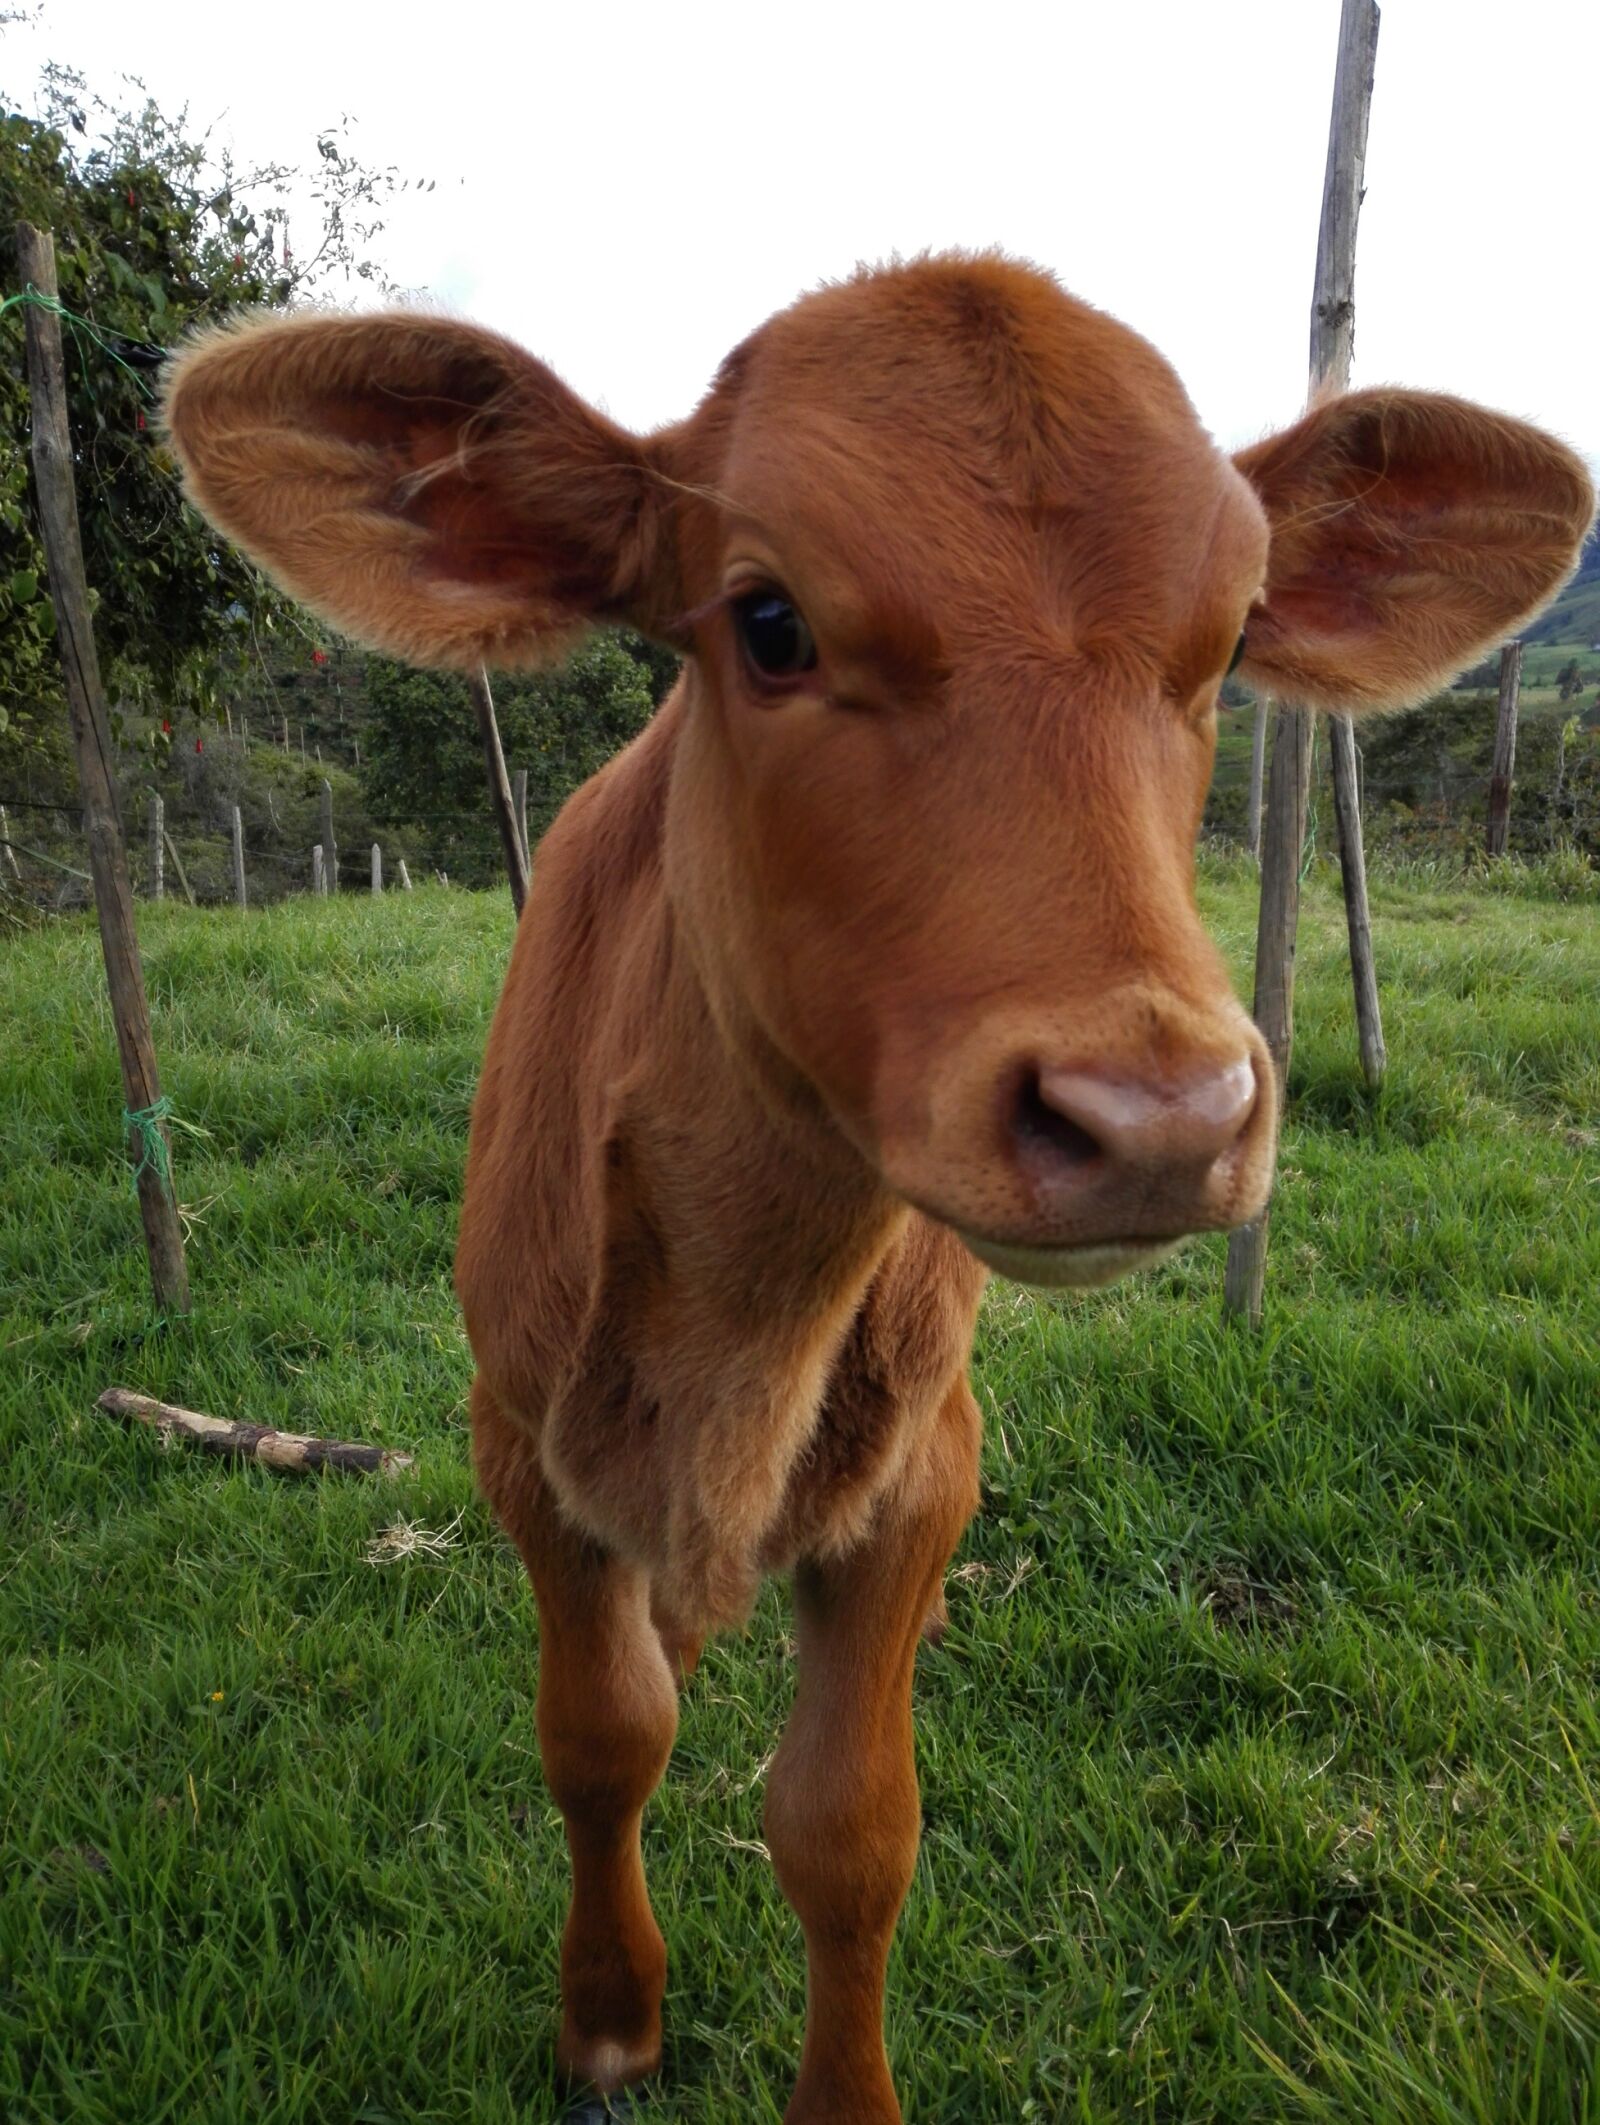 HUAWEI P7-L12 sample photo. Calf, cow, livestock photography